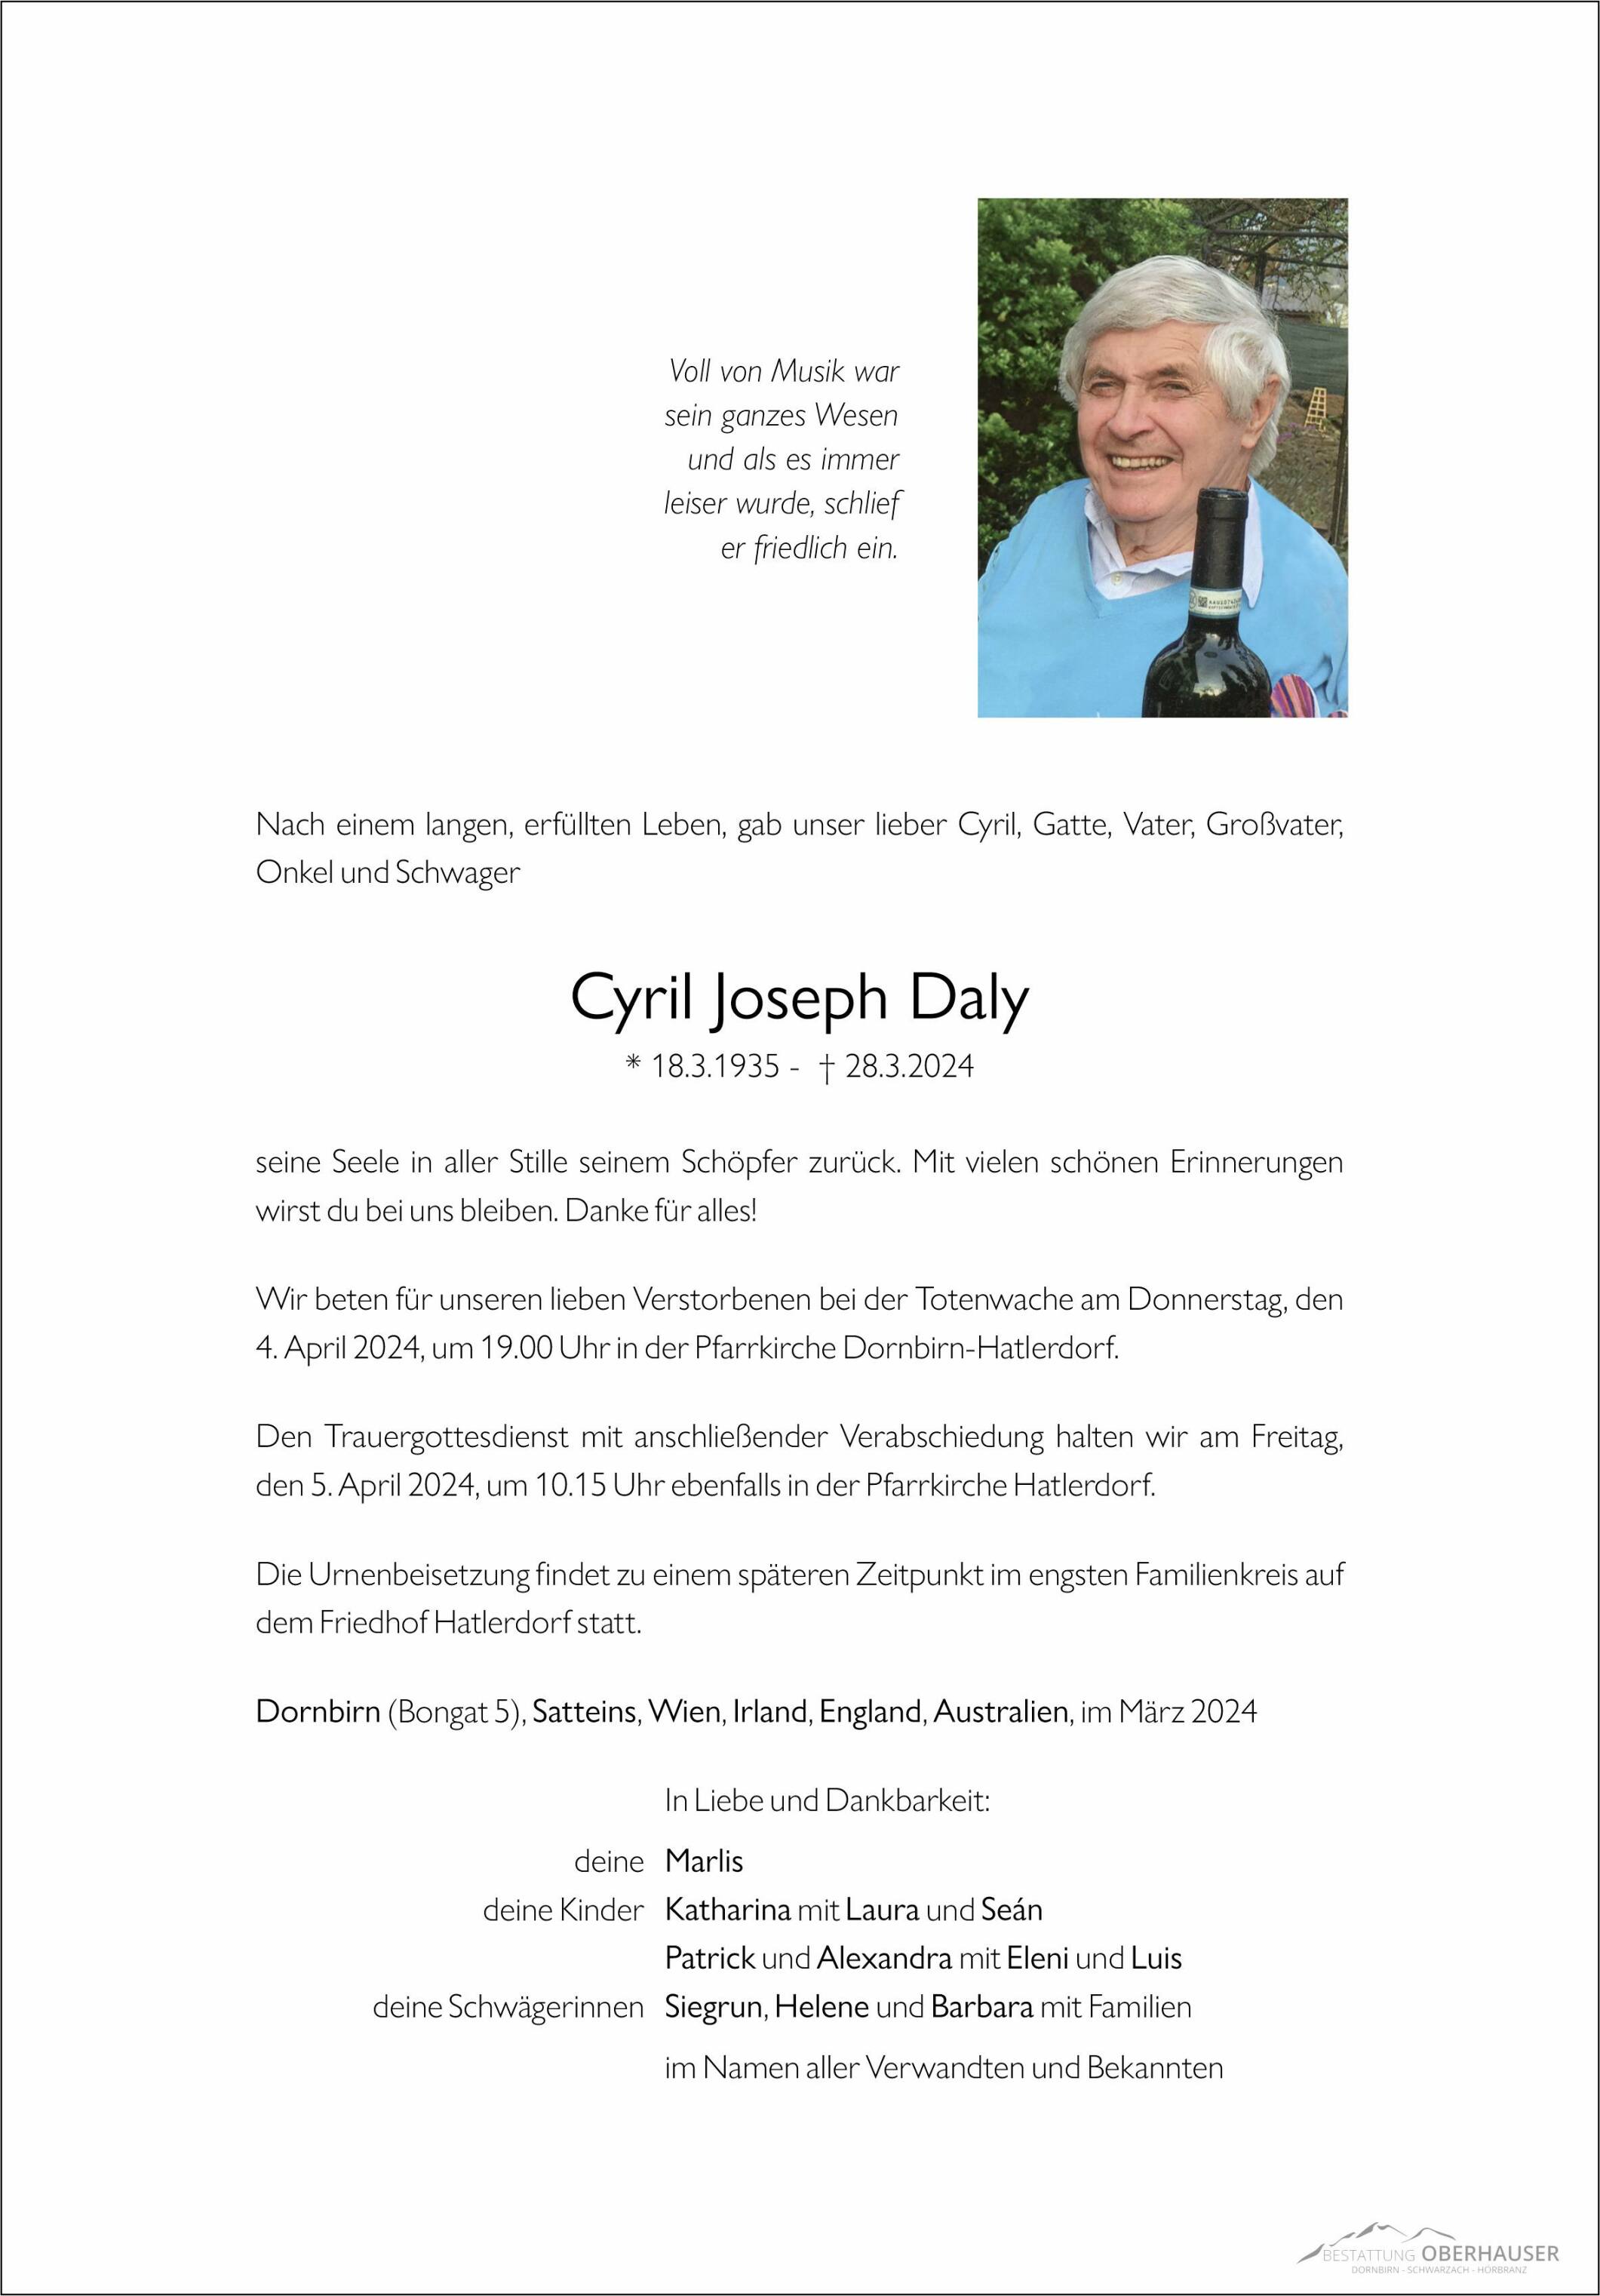 Cyril Joseph Daly